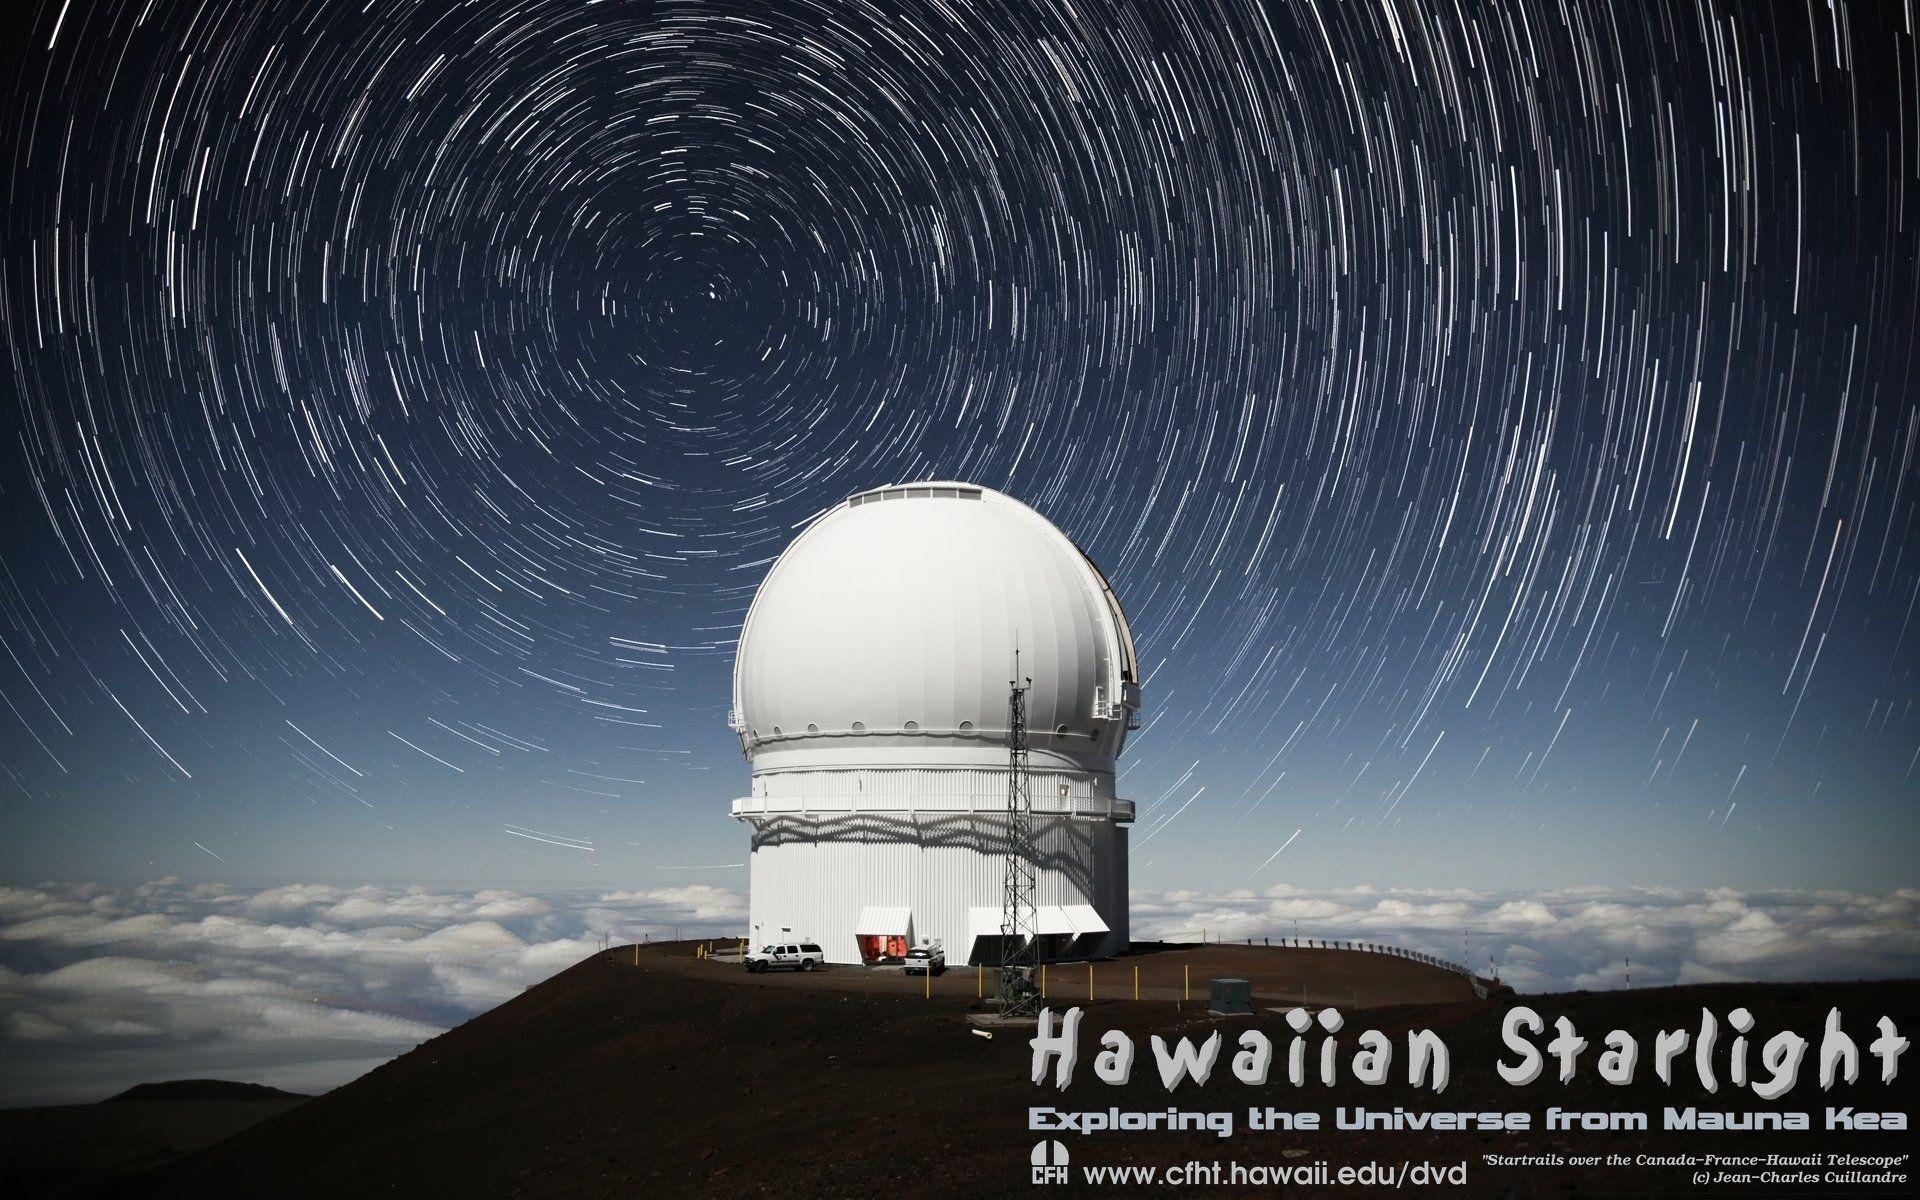 Hawaiian Starlight Film the Universe from Mauna Kea